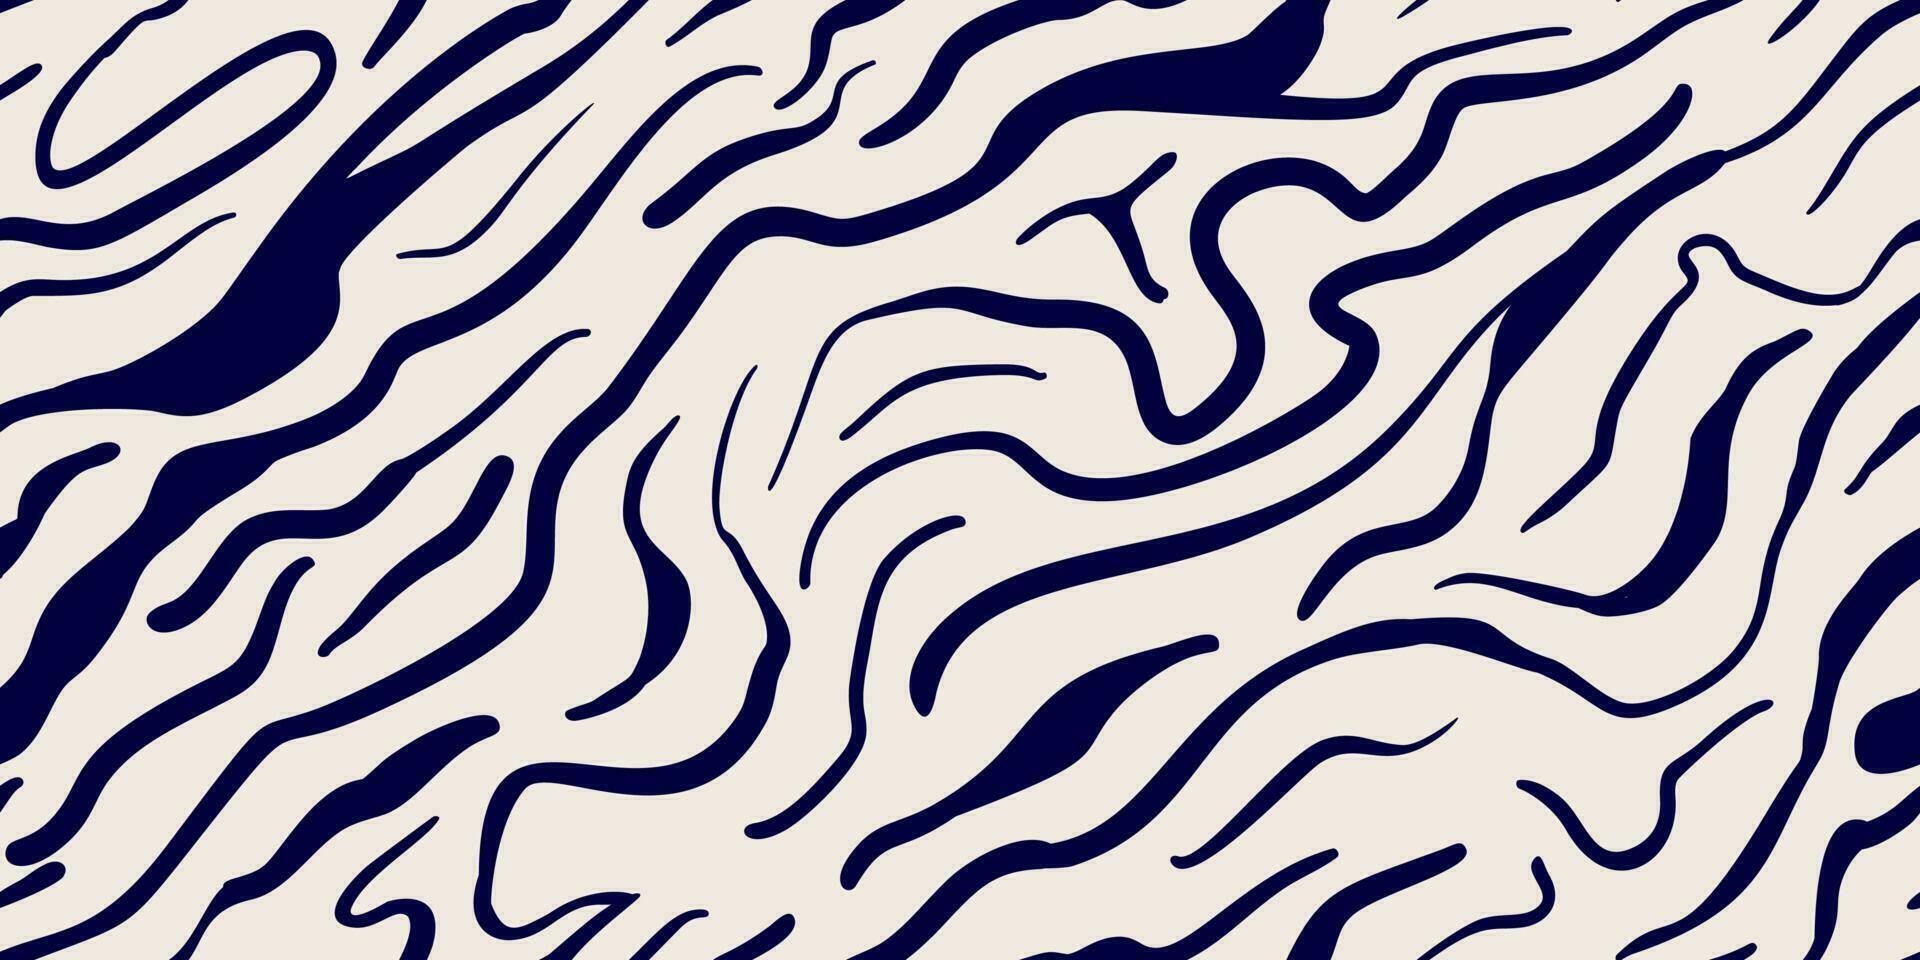 Circle of Zebra Stripes Pattern. Zebra print, animal skin, abstract pattern, line background, hand drawn vector illustration. Poster, banner. Black and white artwork monochrome